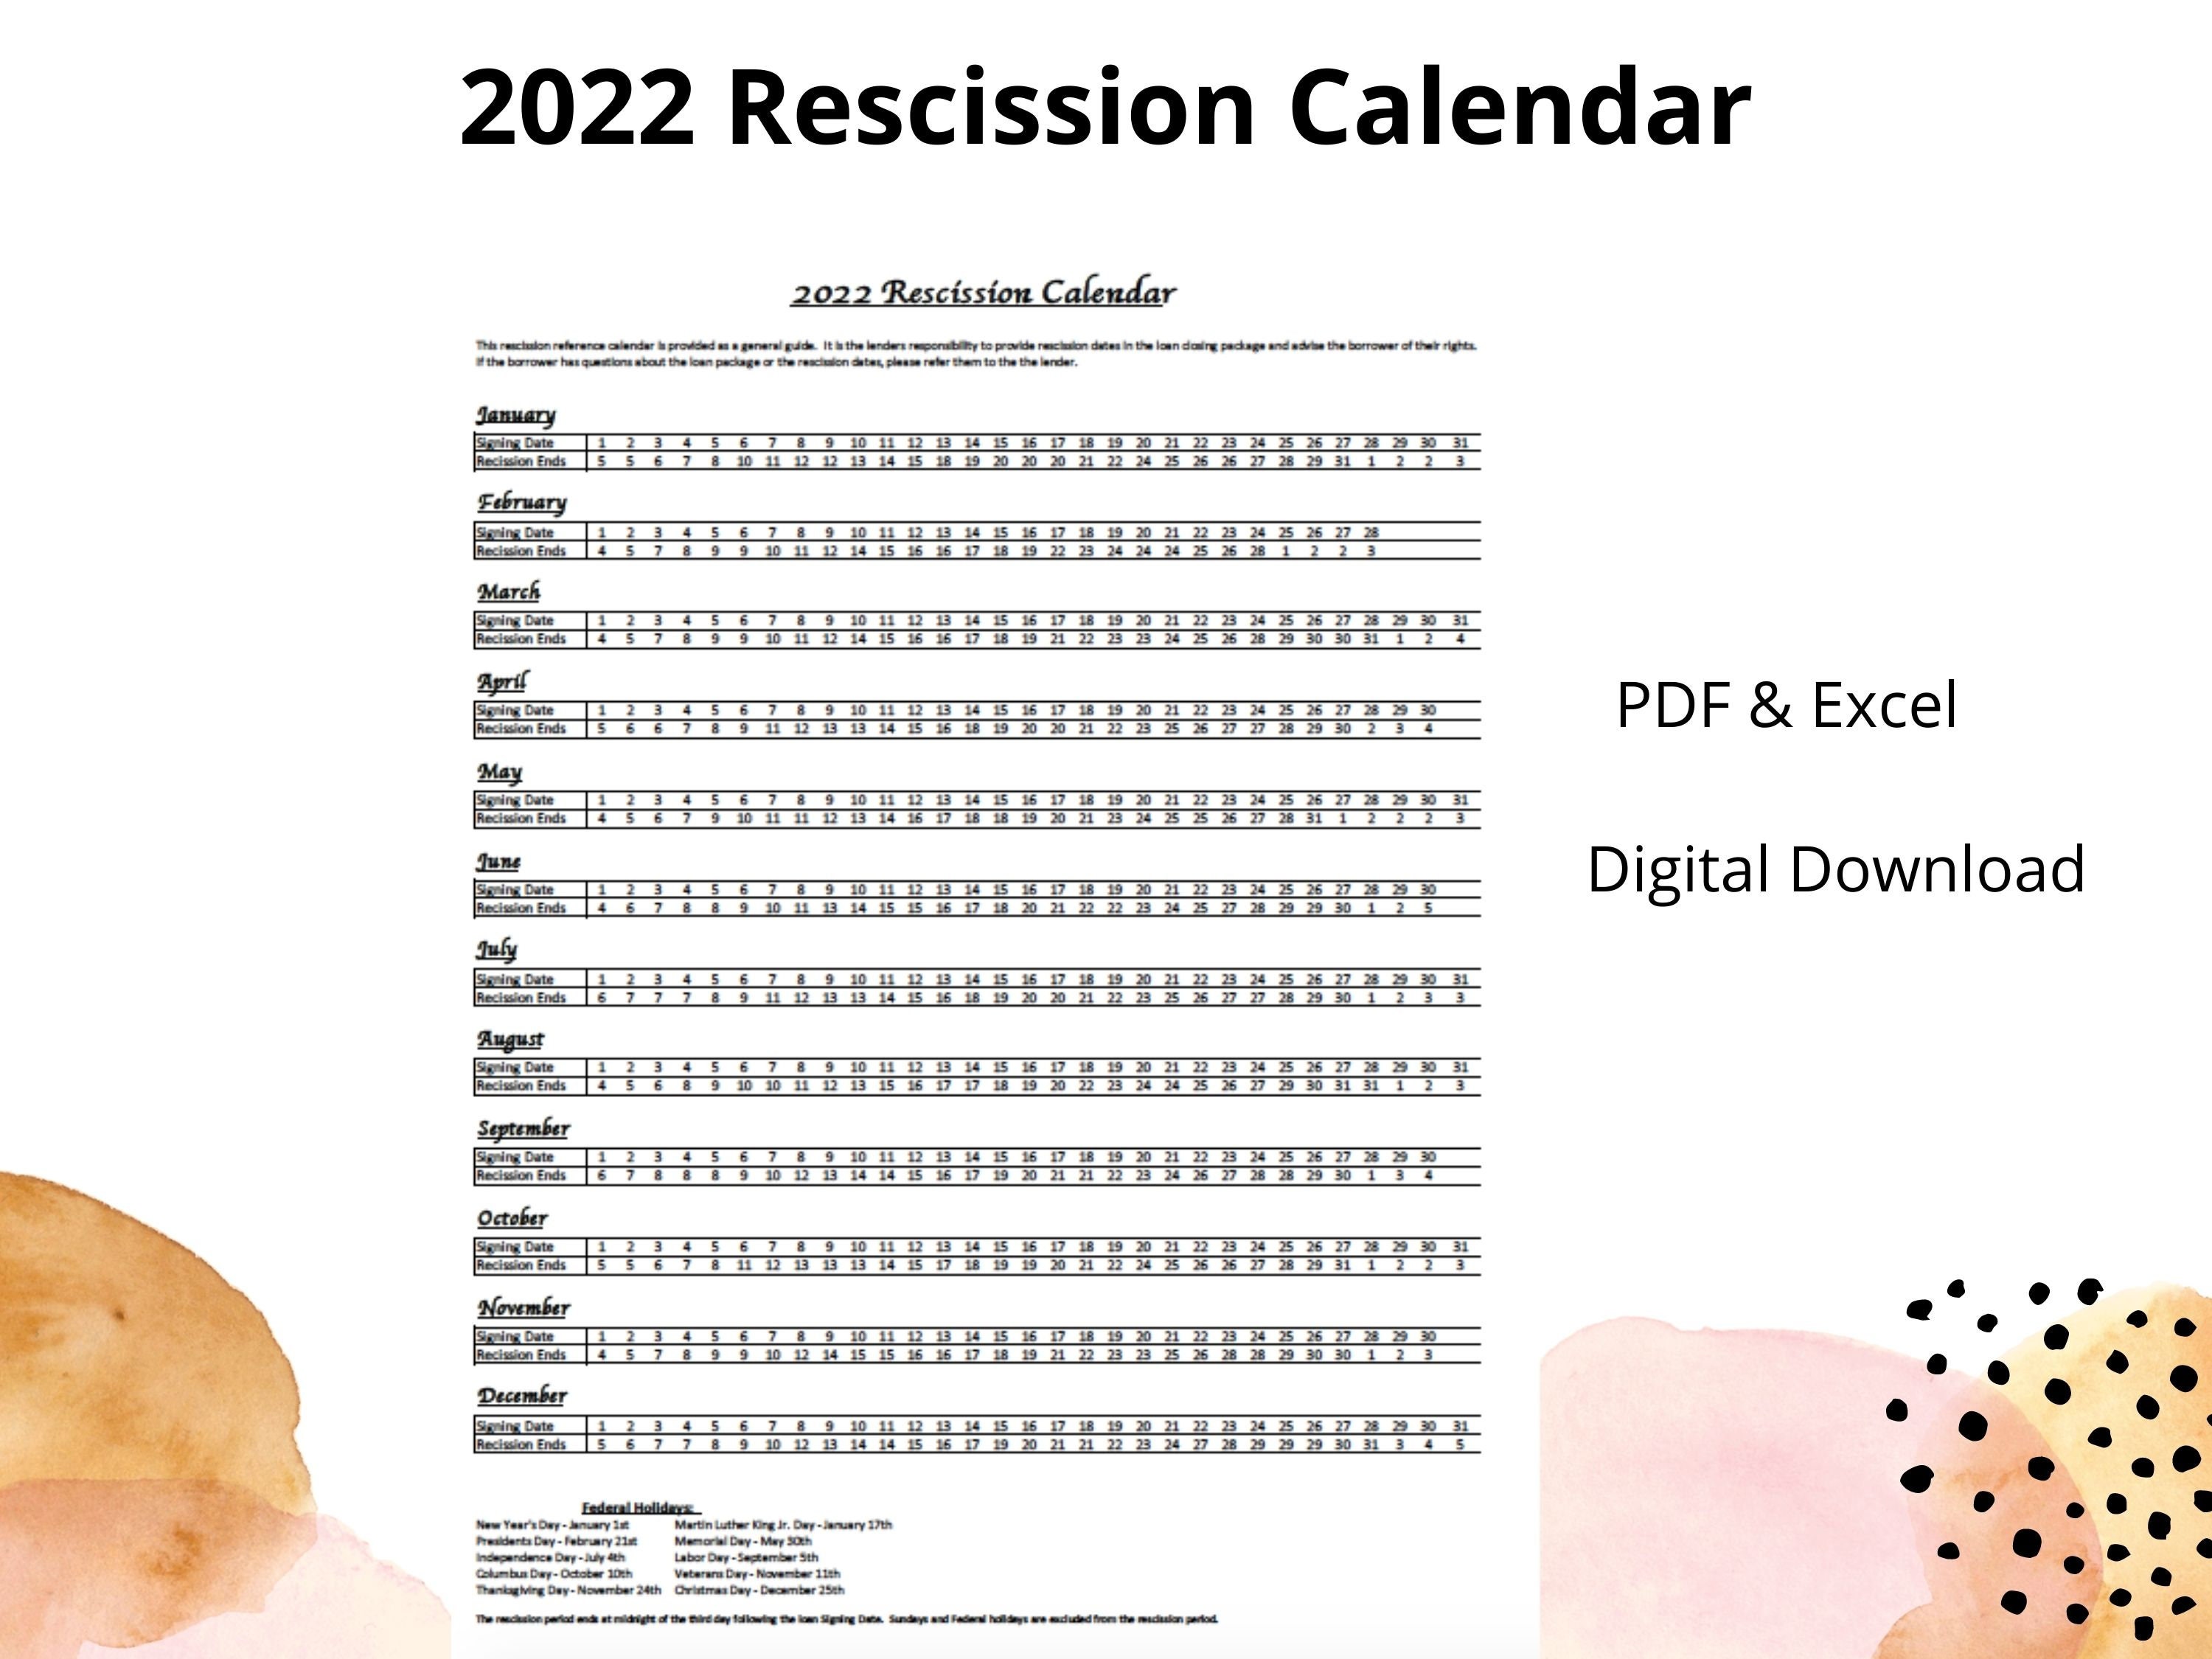 2022 Rescission Calendar for Loan Signing Agents Business Etsy UK